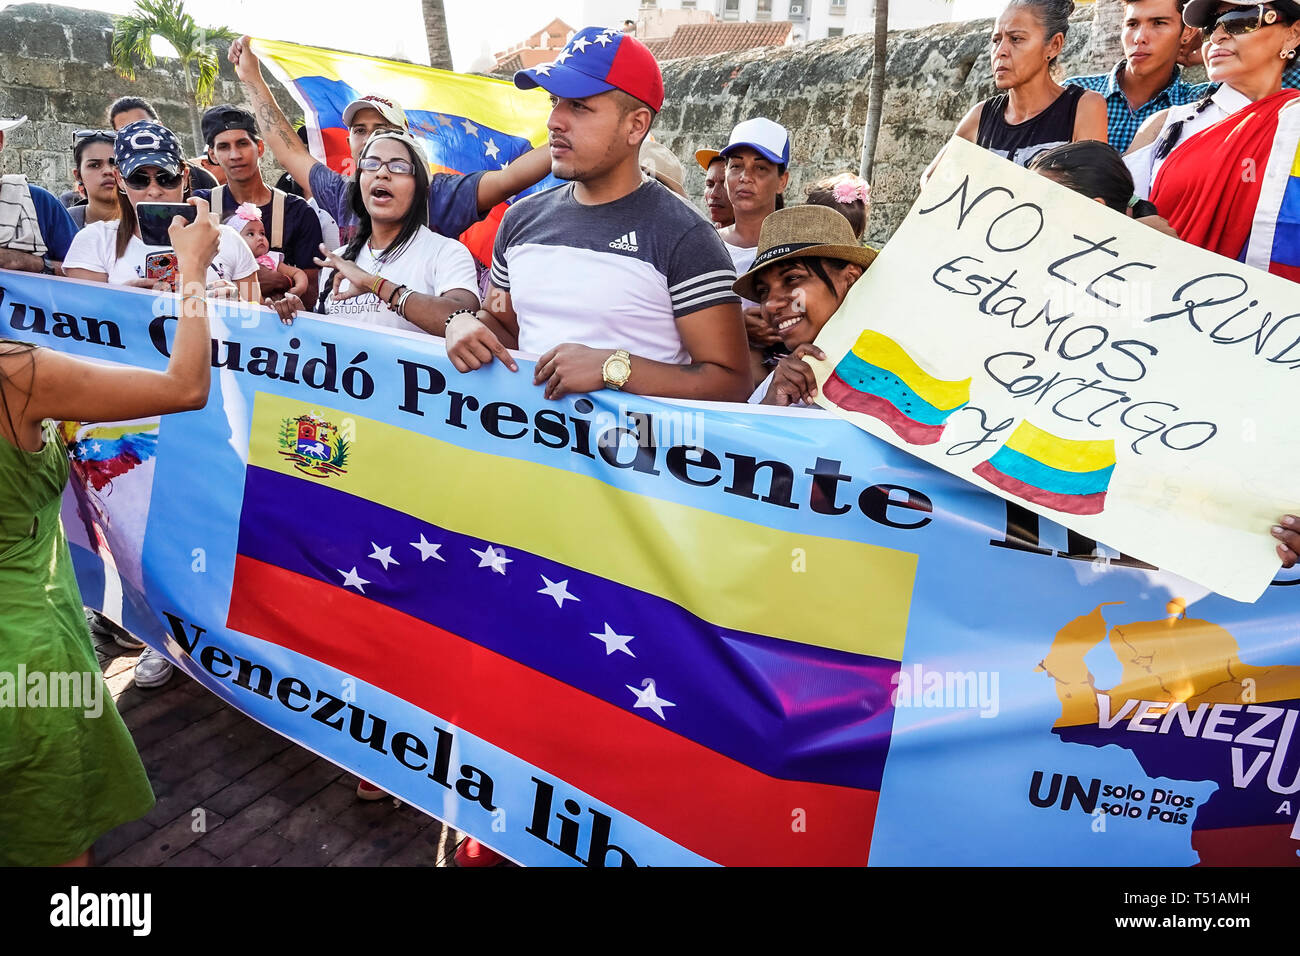 Cartagena Colombia,Hispanic resident residents,man men male,woman female women,protesters,demonstration,Venezuelan exiles,supporting interim president Stock Photo